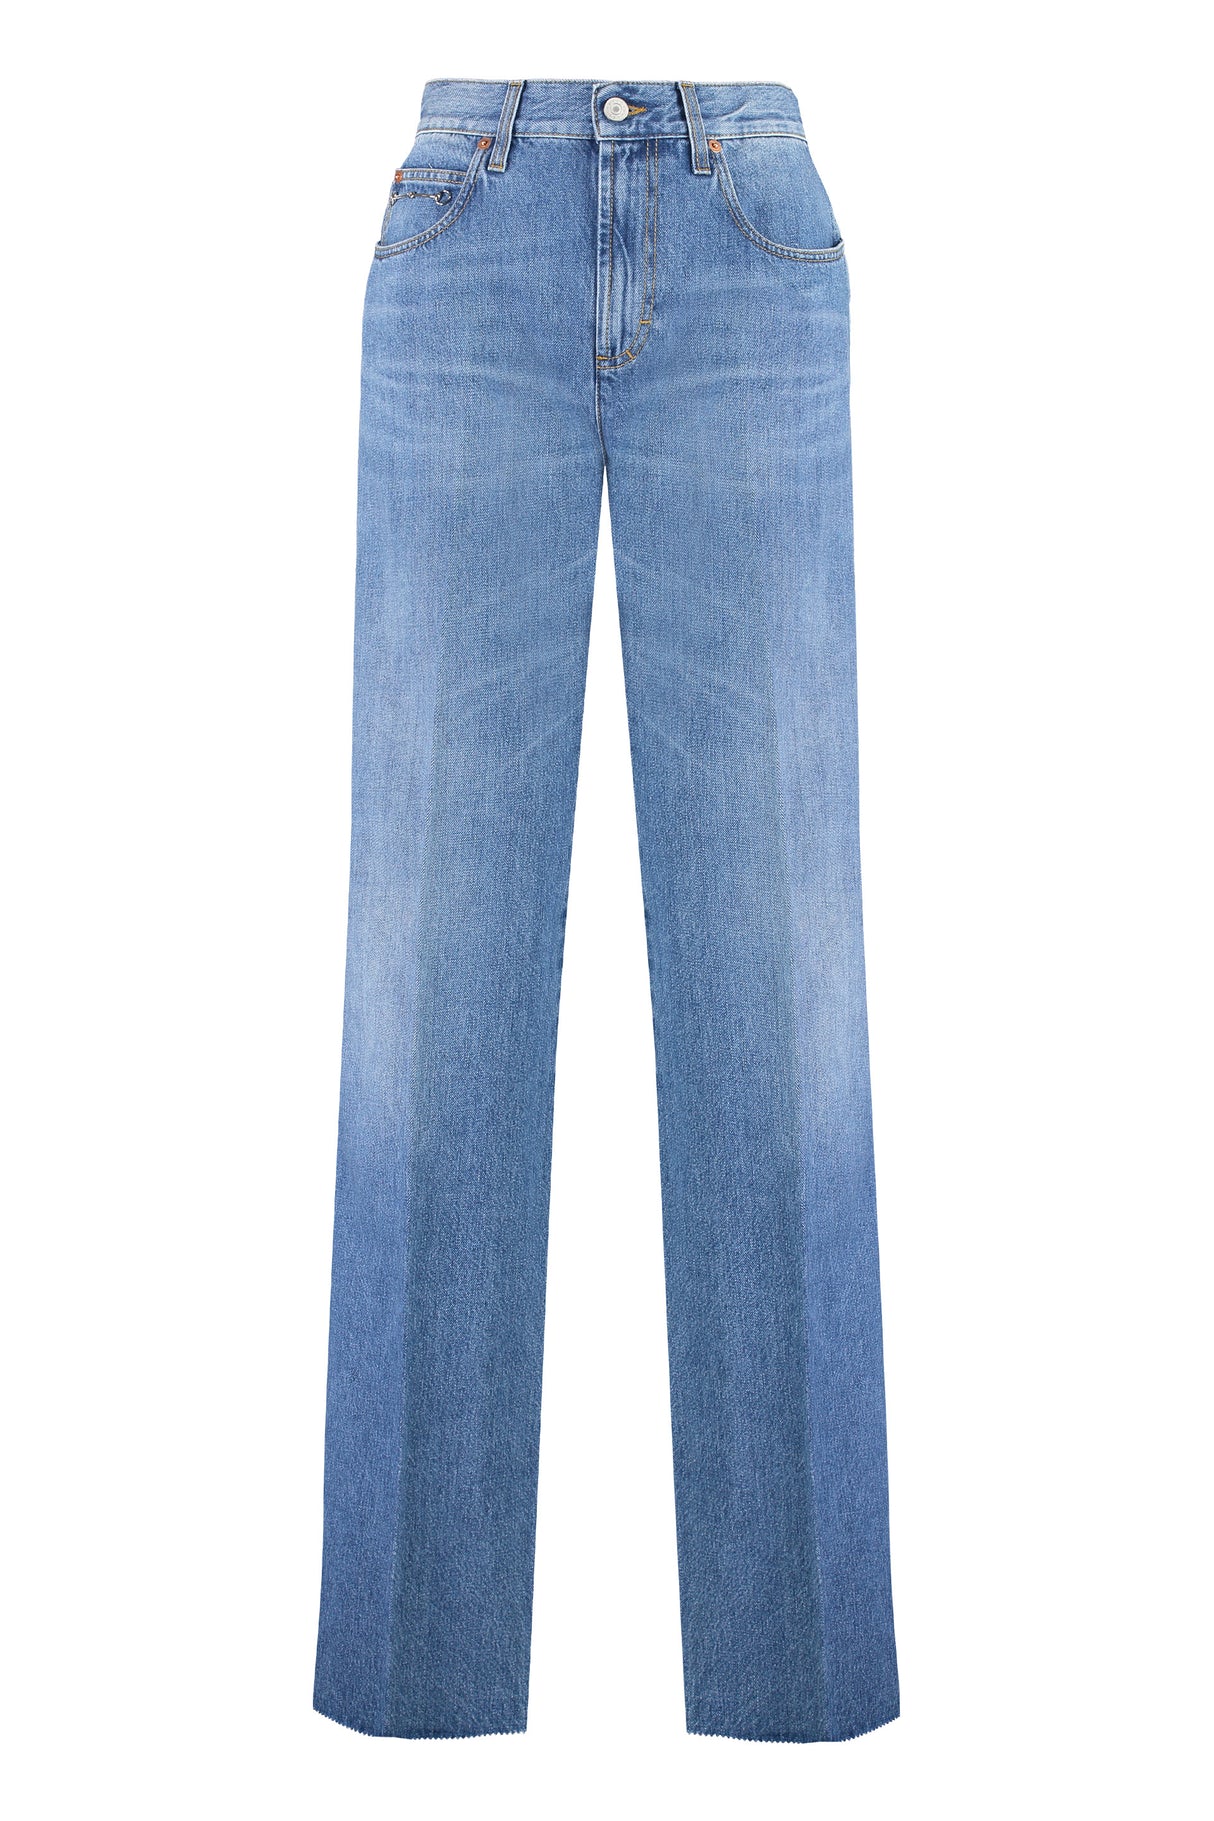 GUCCI Wide-Leg Faded Denim Jeans for Women